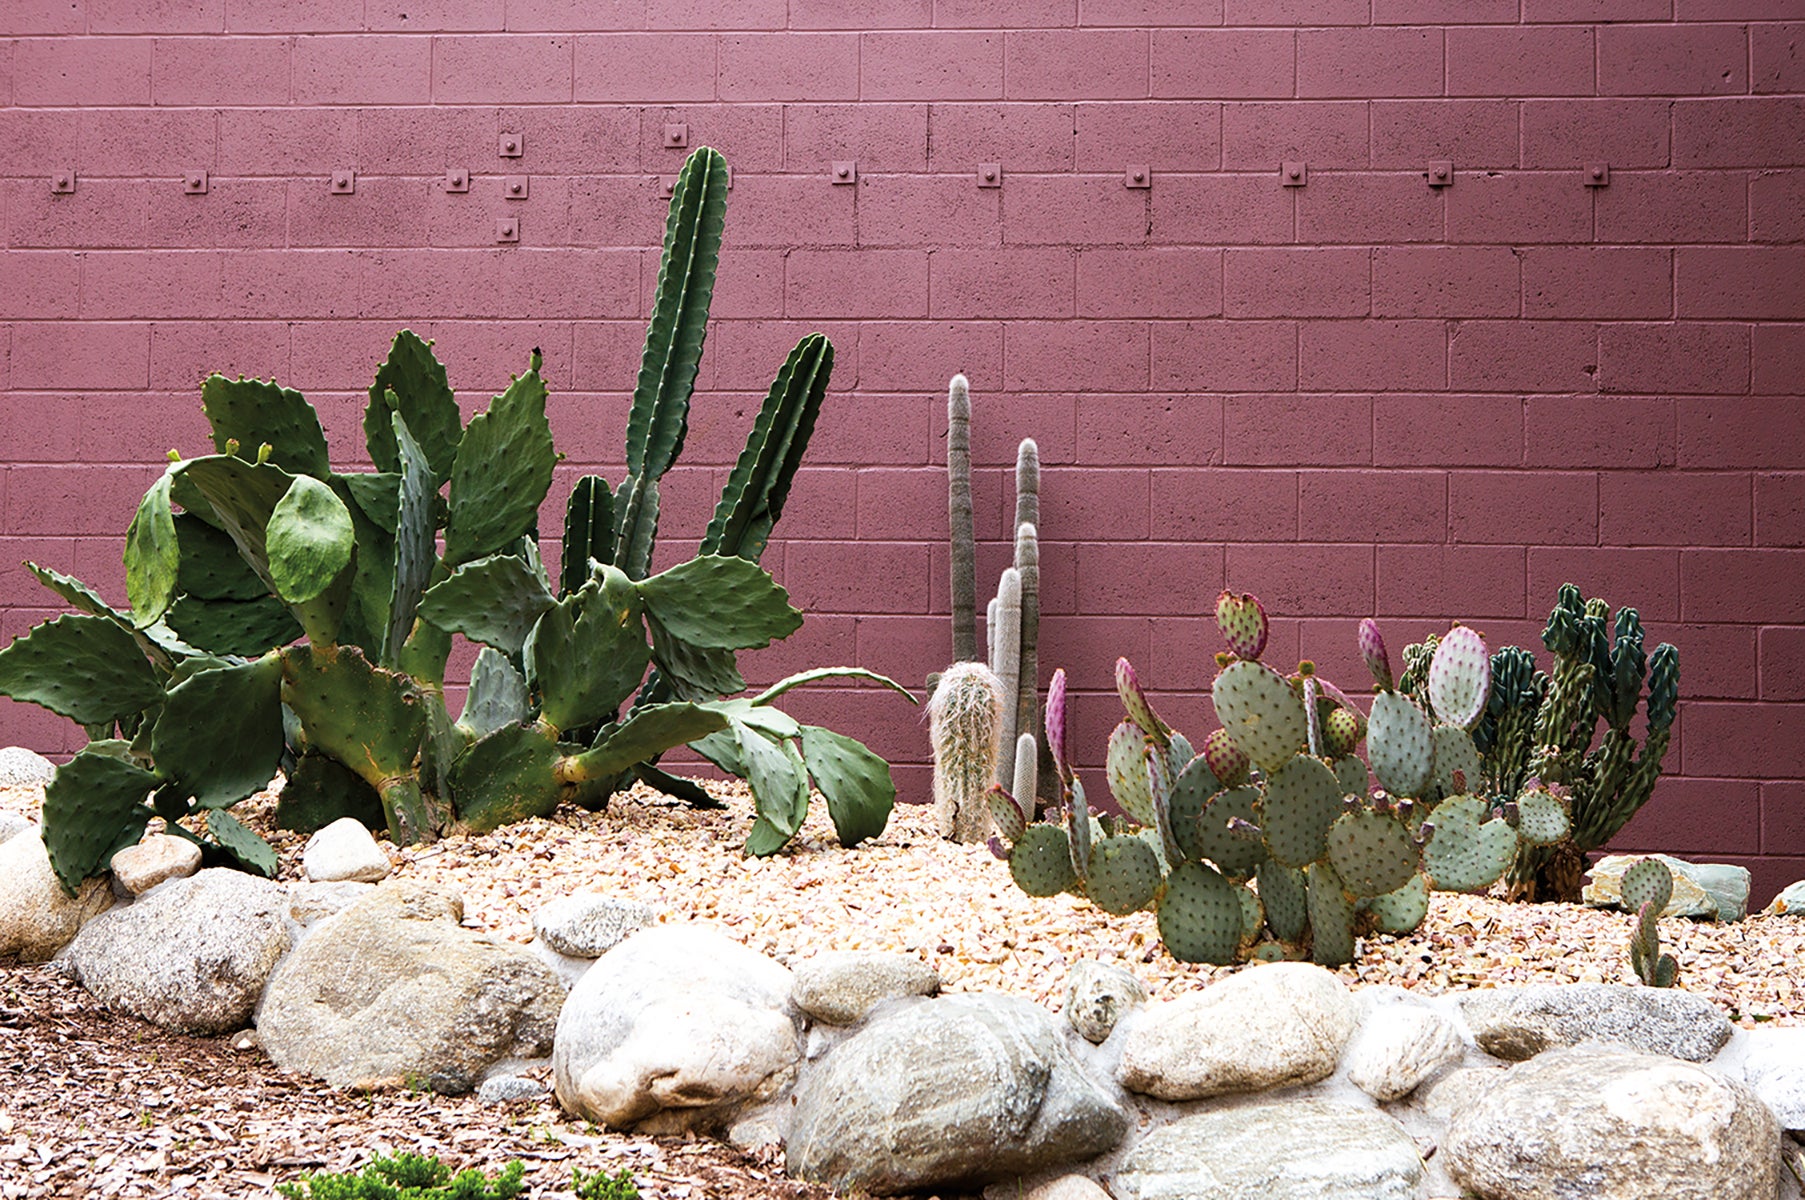 cactus bed in backyard